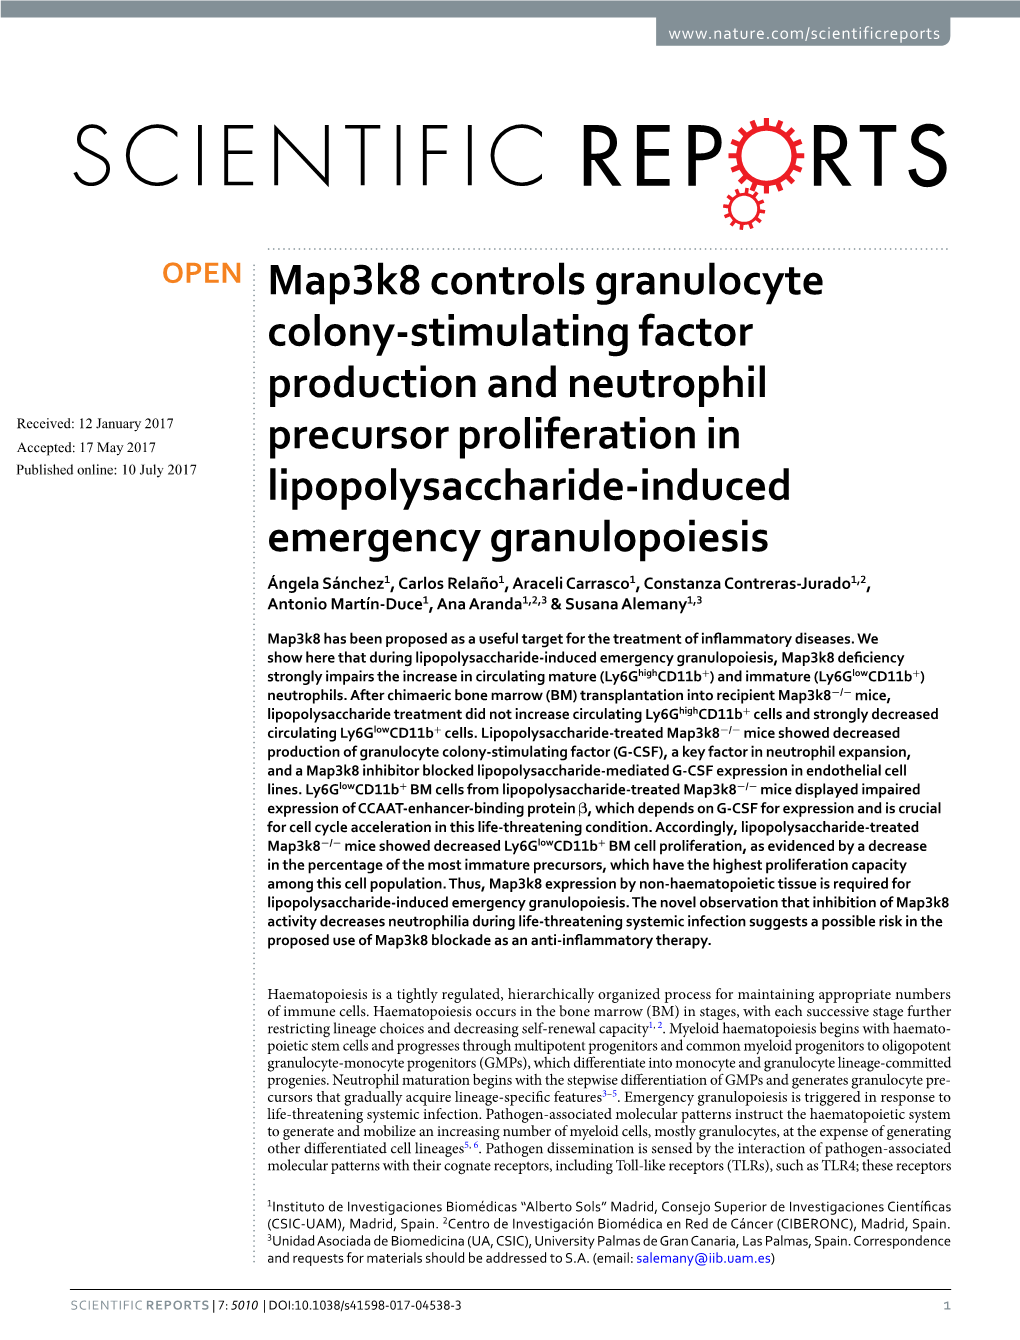 Map3k8 Controls Granulocyte Colony-Stimulating Factor Production